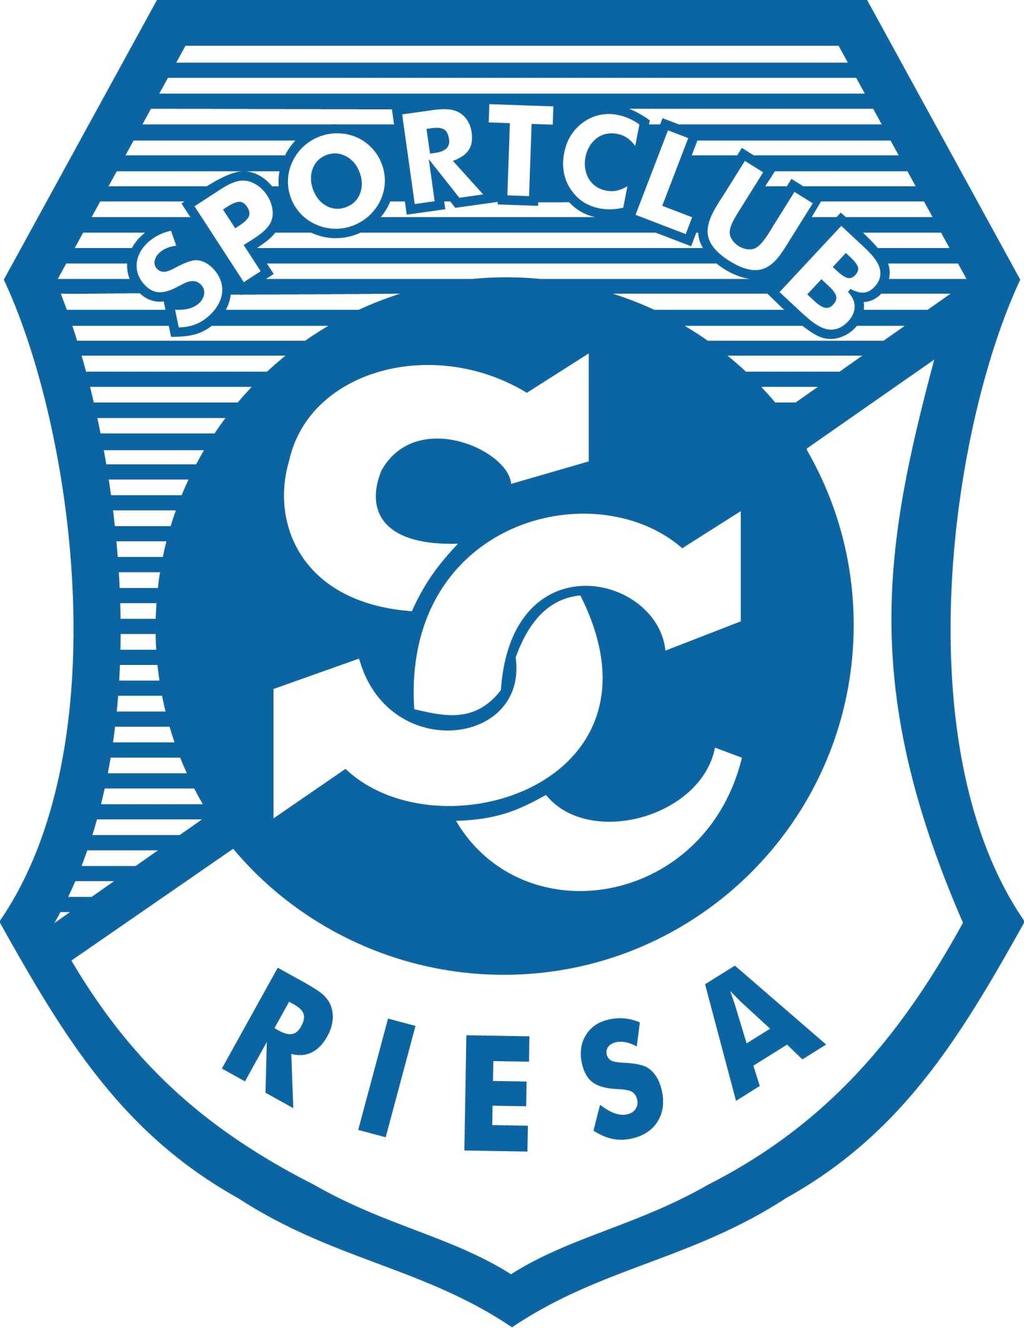 Wettkampfanlage: Sportclub Riesa e.v.